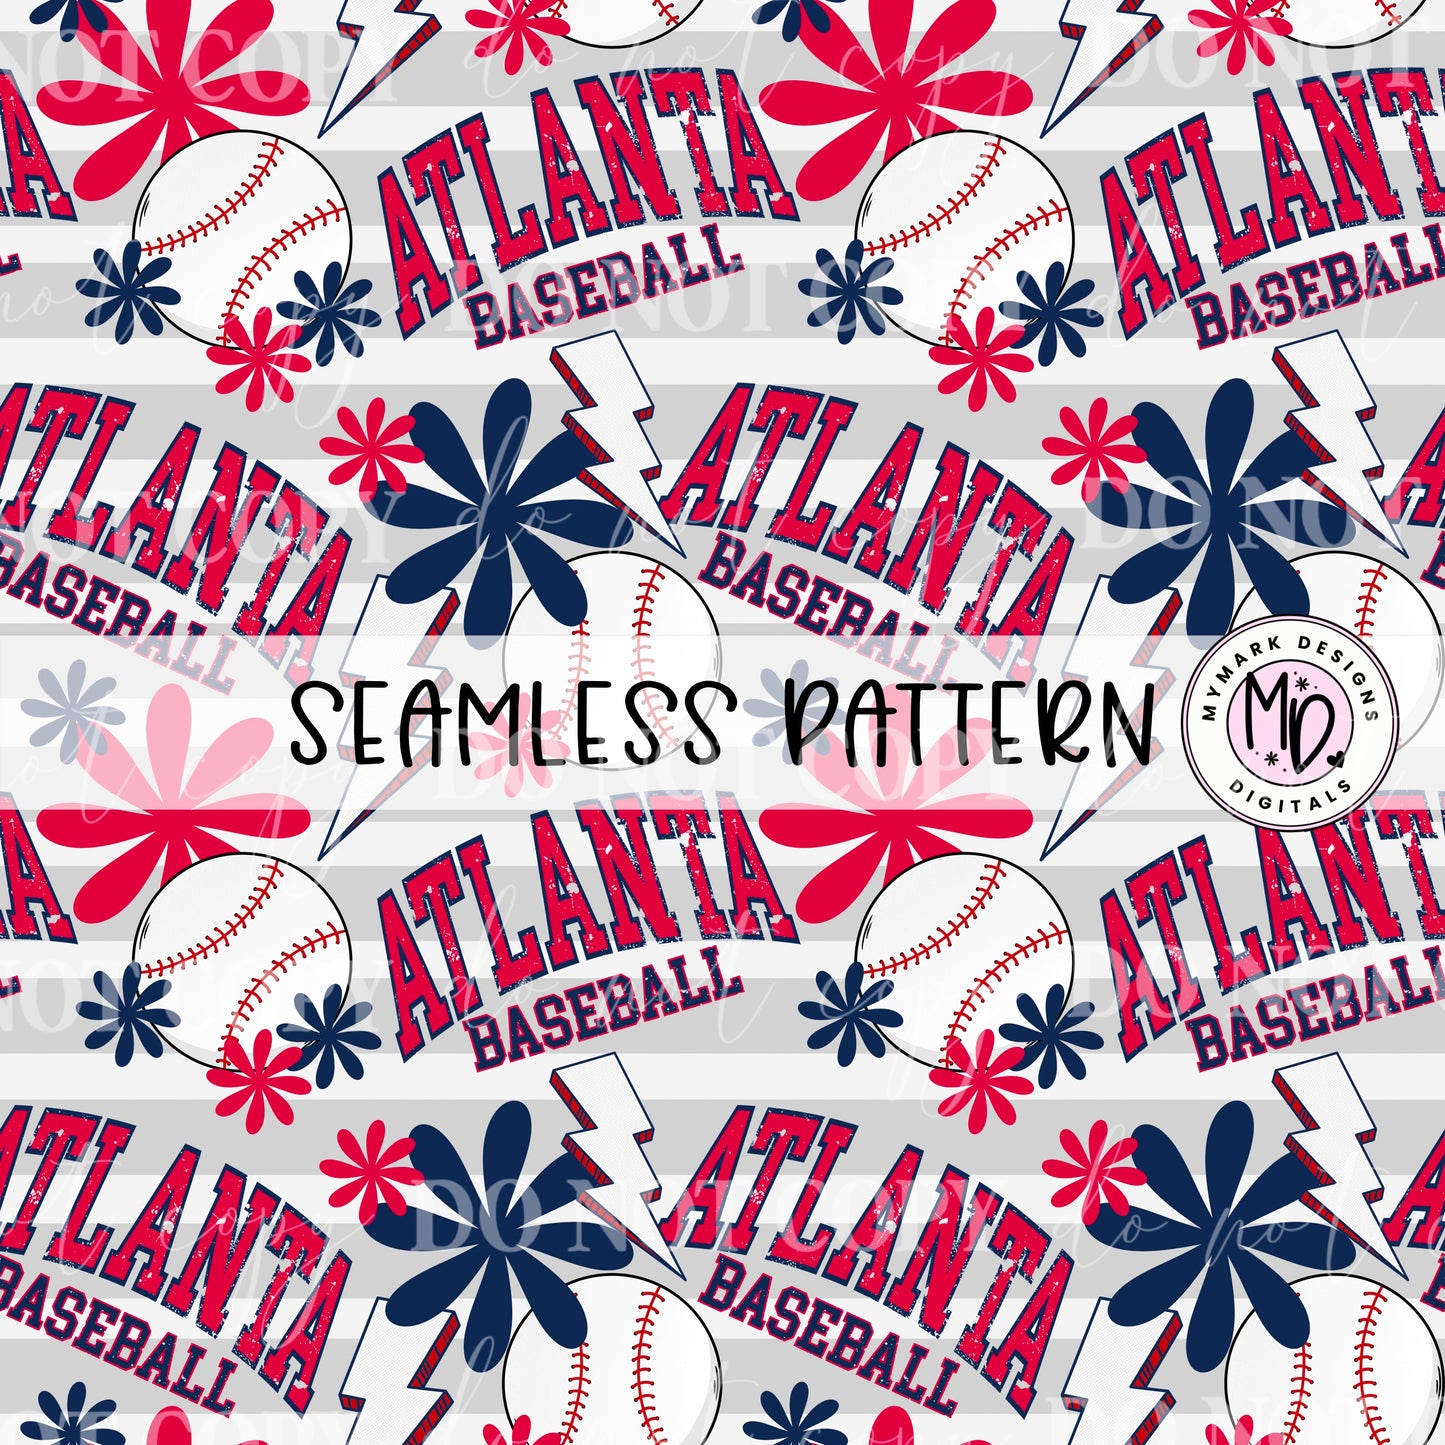 Atlanta Baseball : Seamless Design